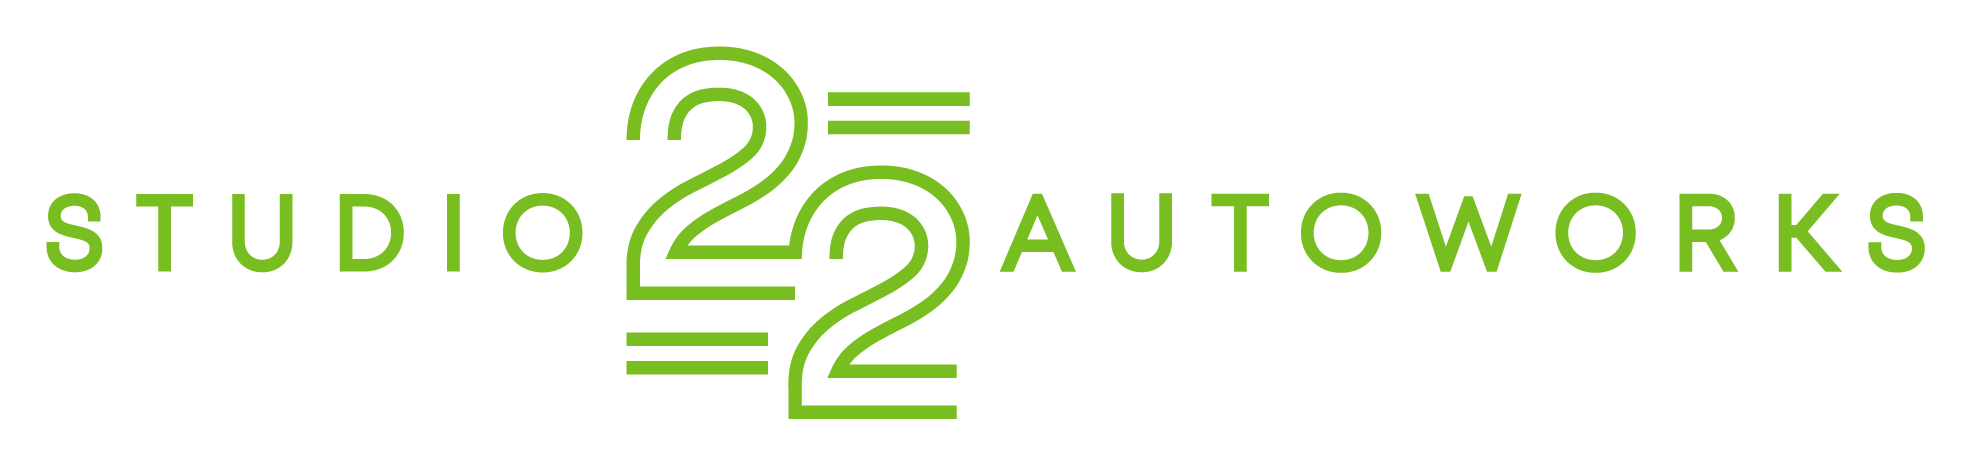 Studio 22 Autoworks